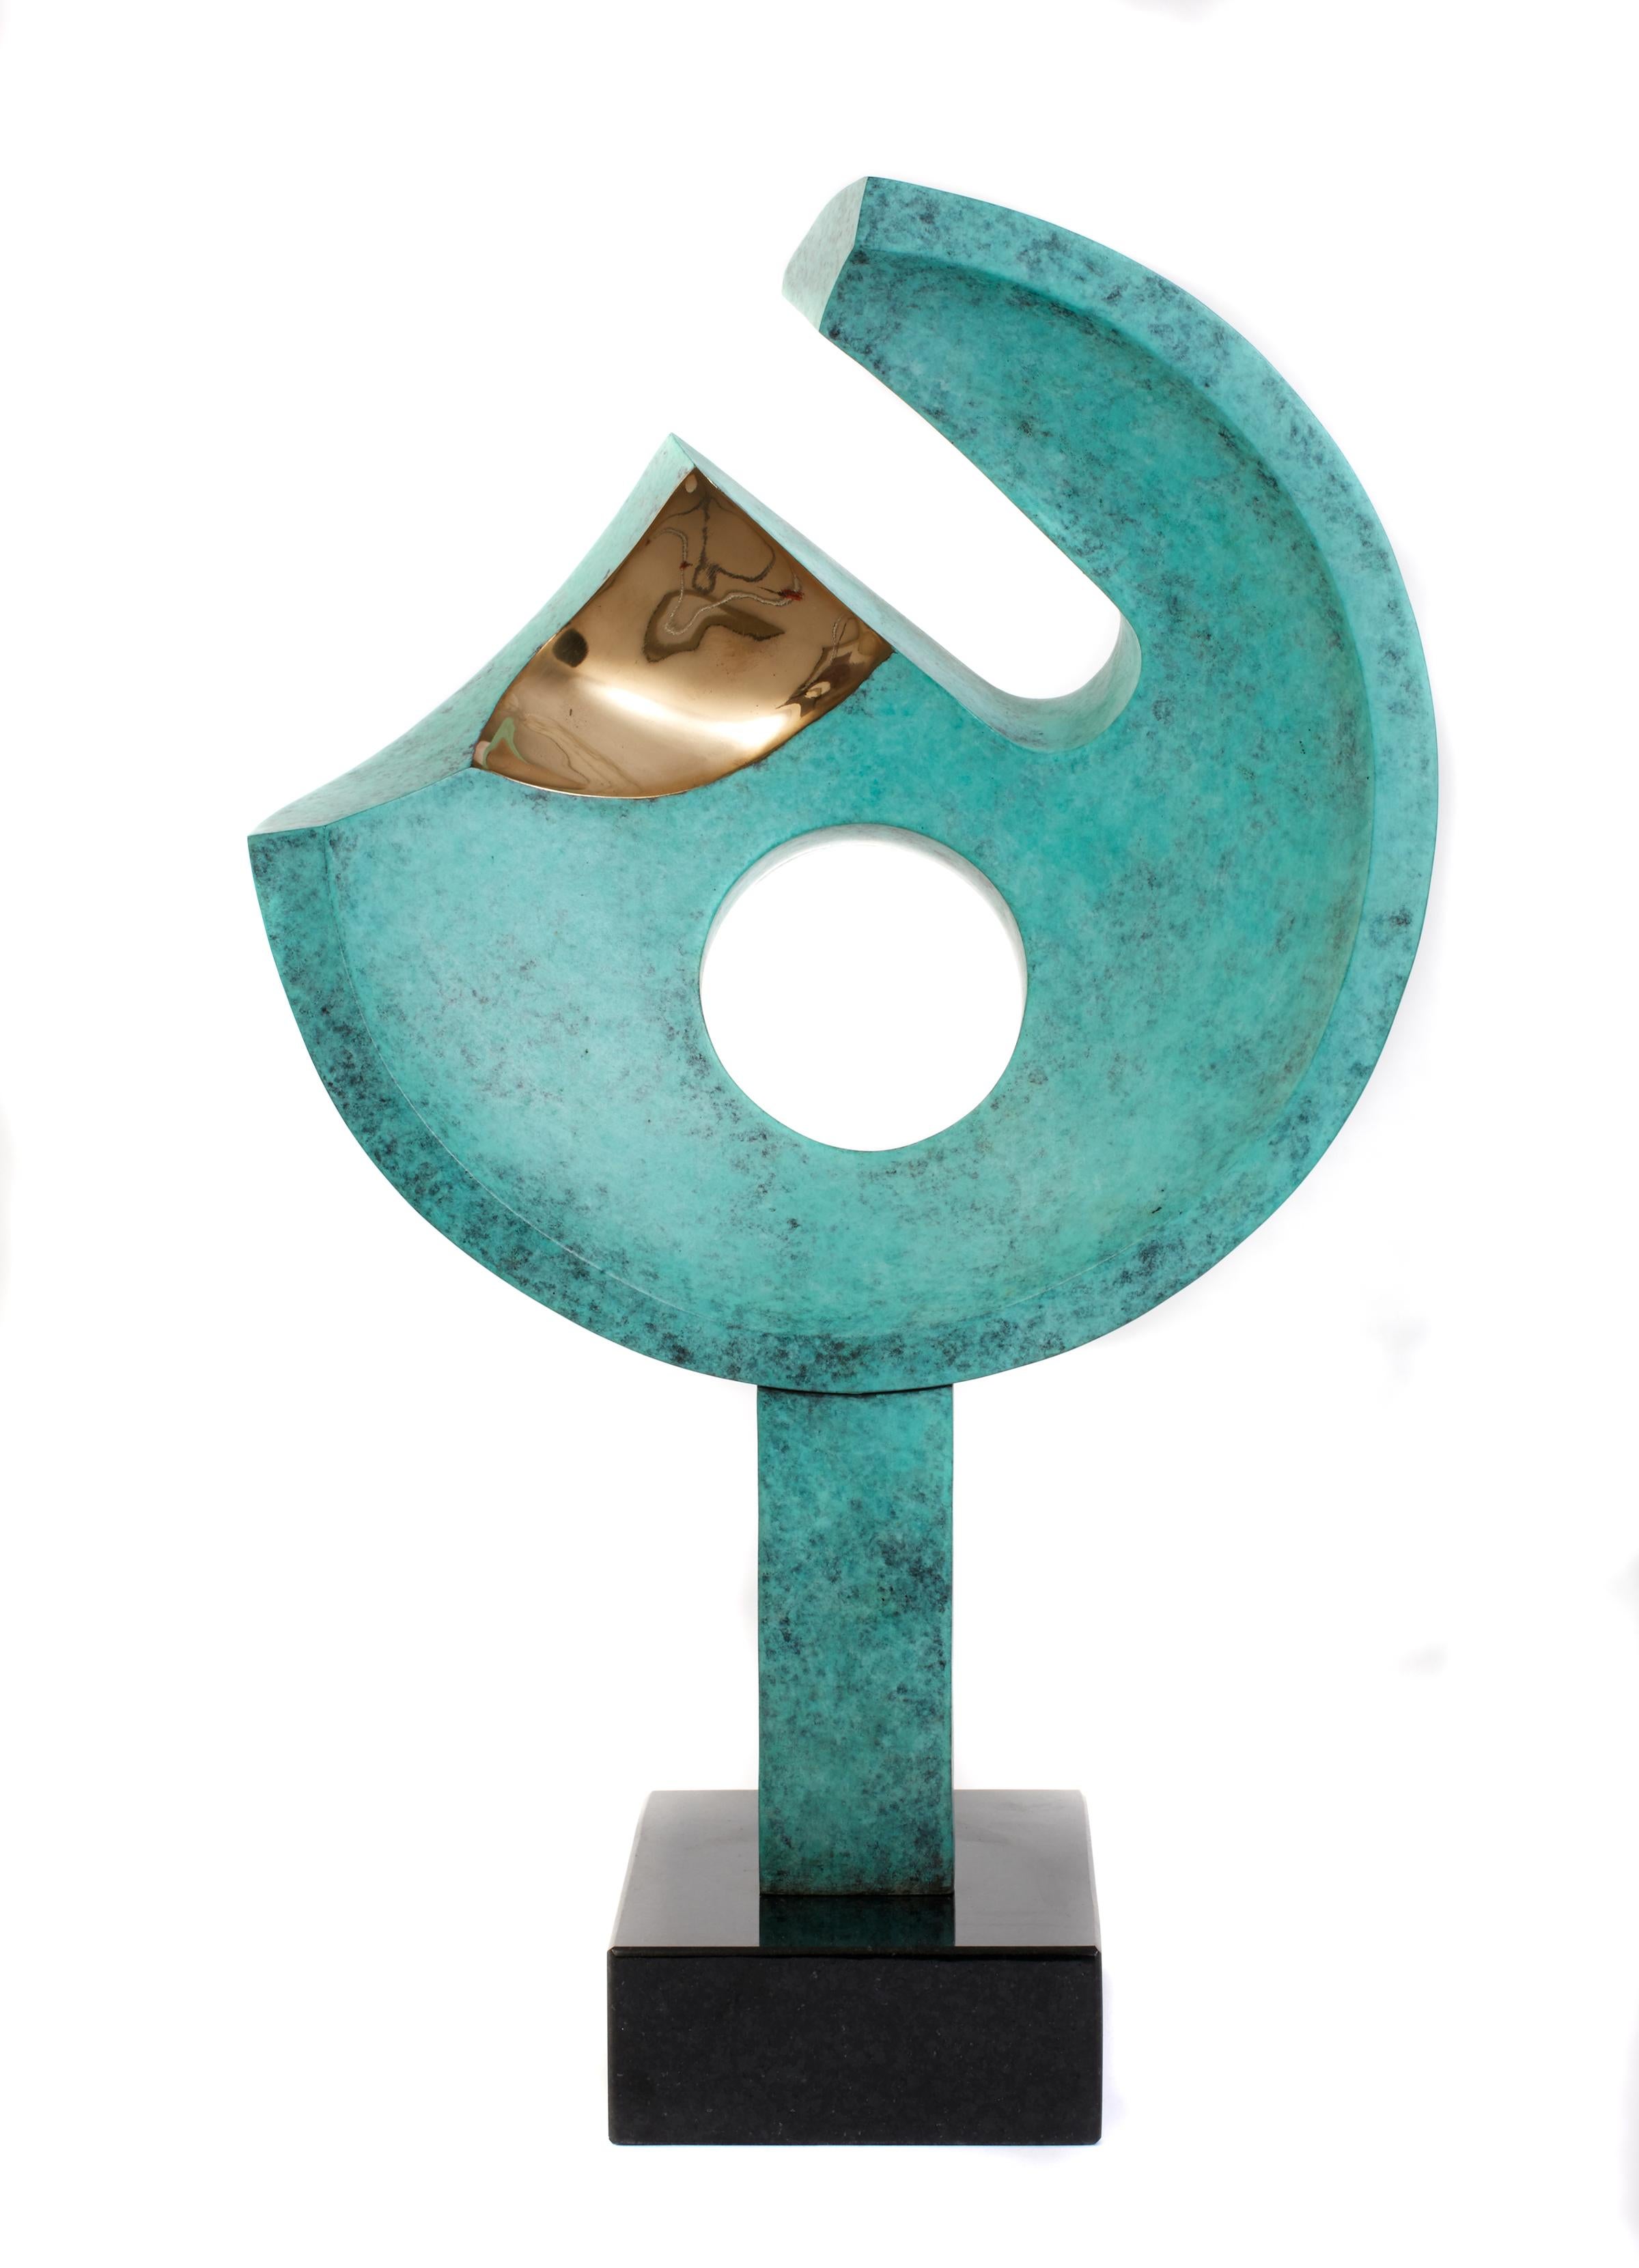  Disc Receiving the Sun-original abstract bronze sculpture-contemporary art - Art by David Sprakes